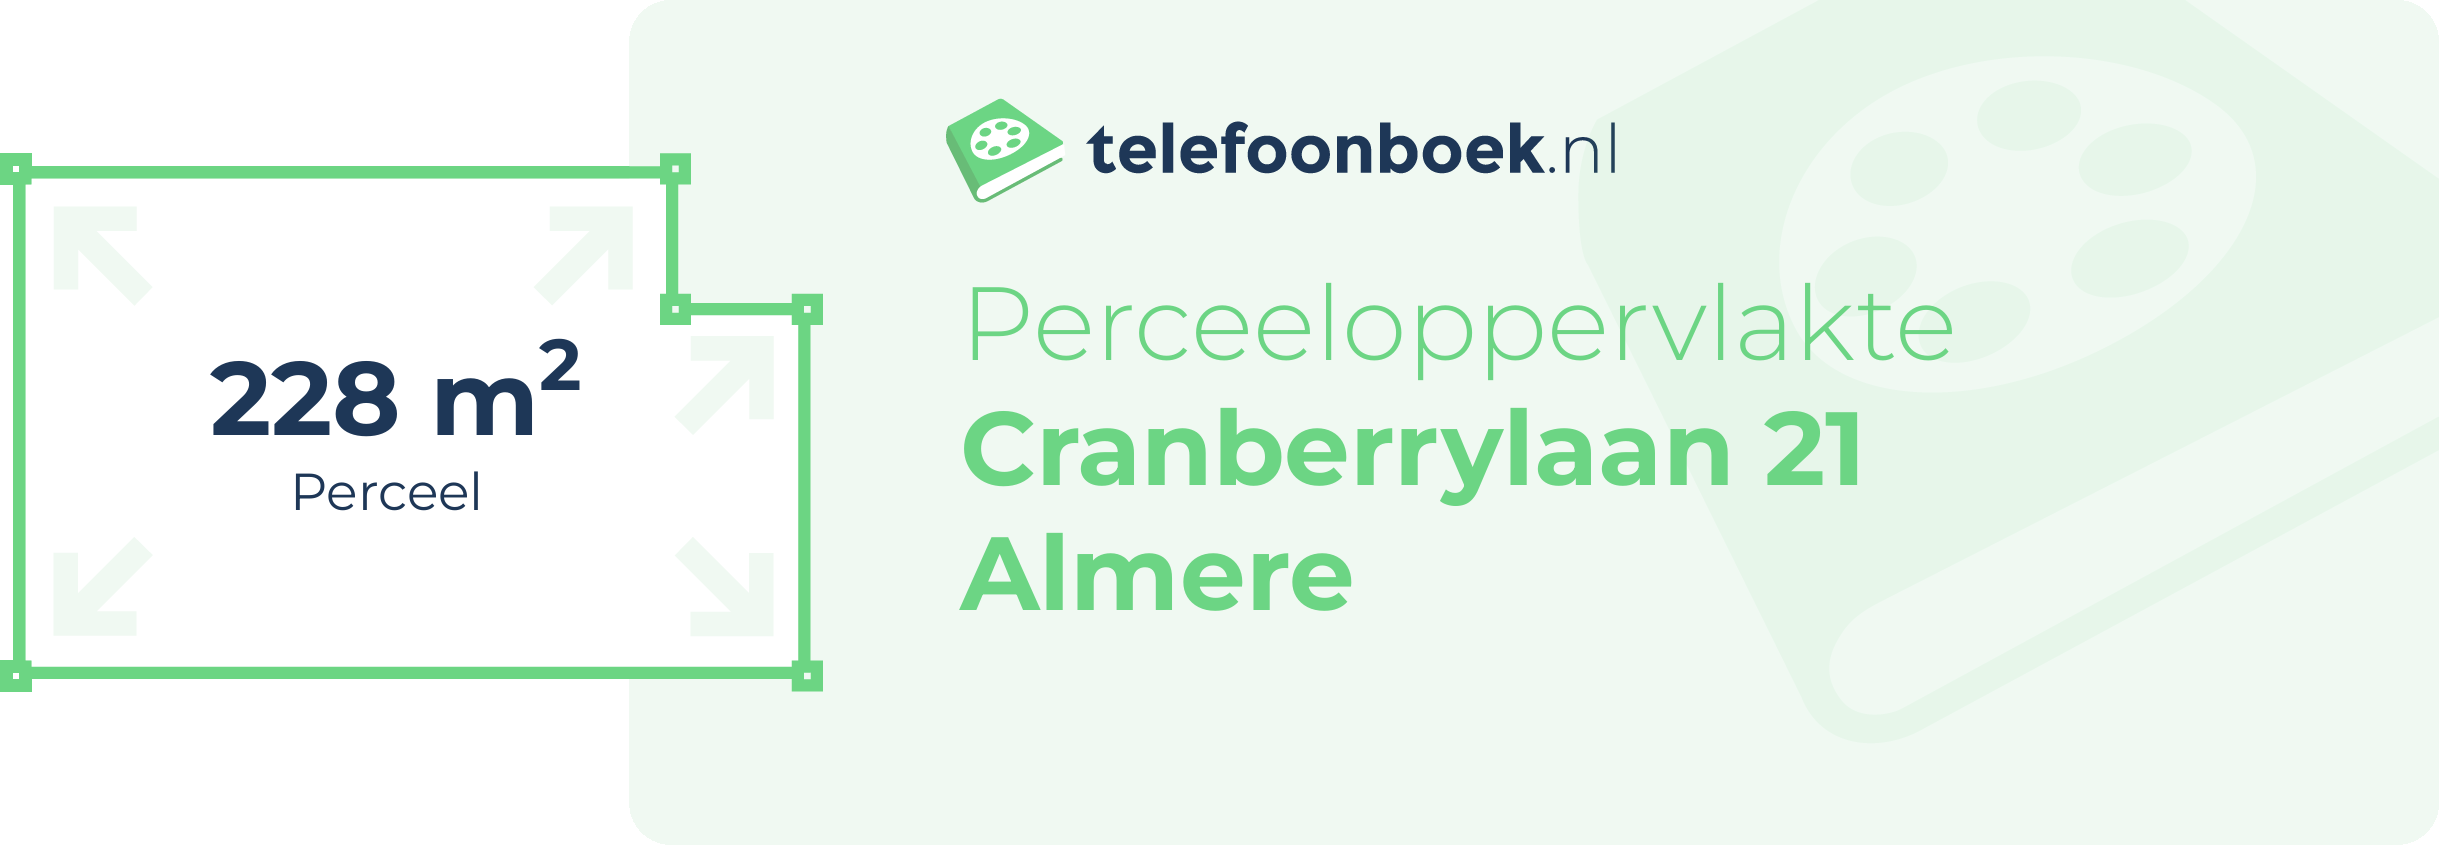 Perceeloppervlakte Cranberrylaan 21 Almere